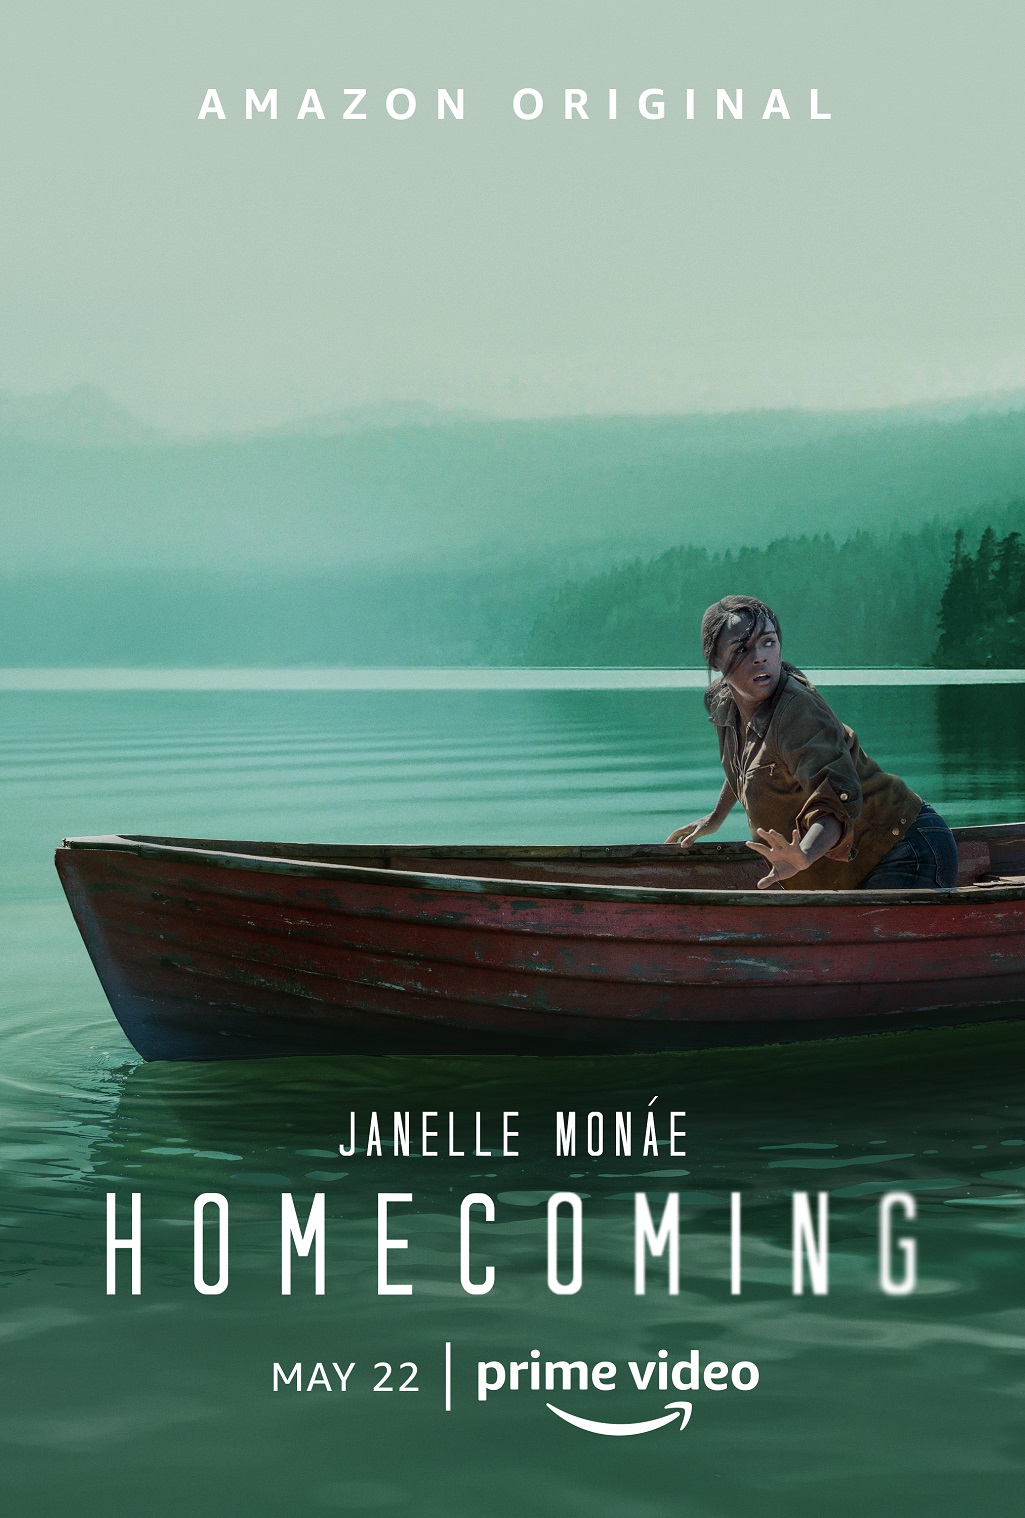 [News] HOMECOMING Returns to Amazon Prime with New Season 2 Trailer